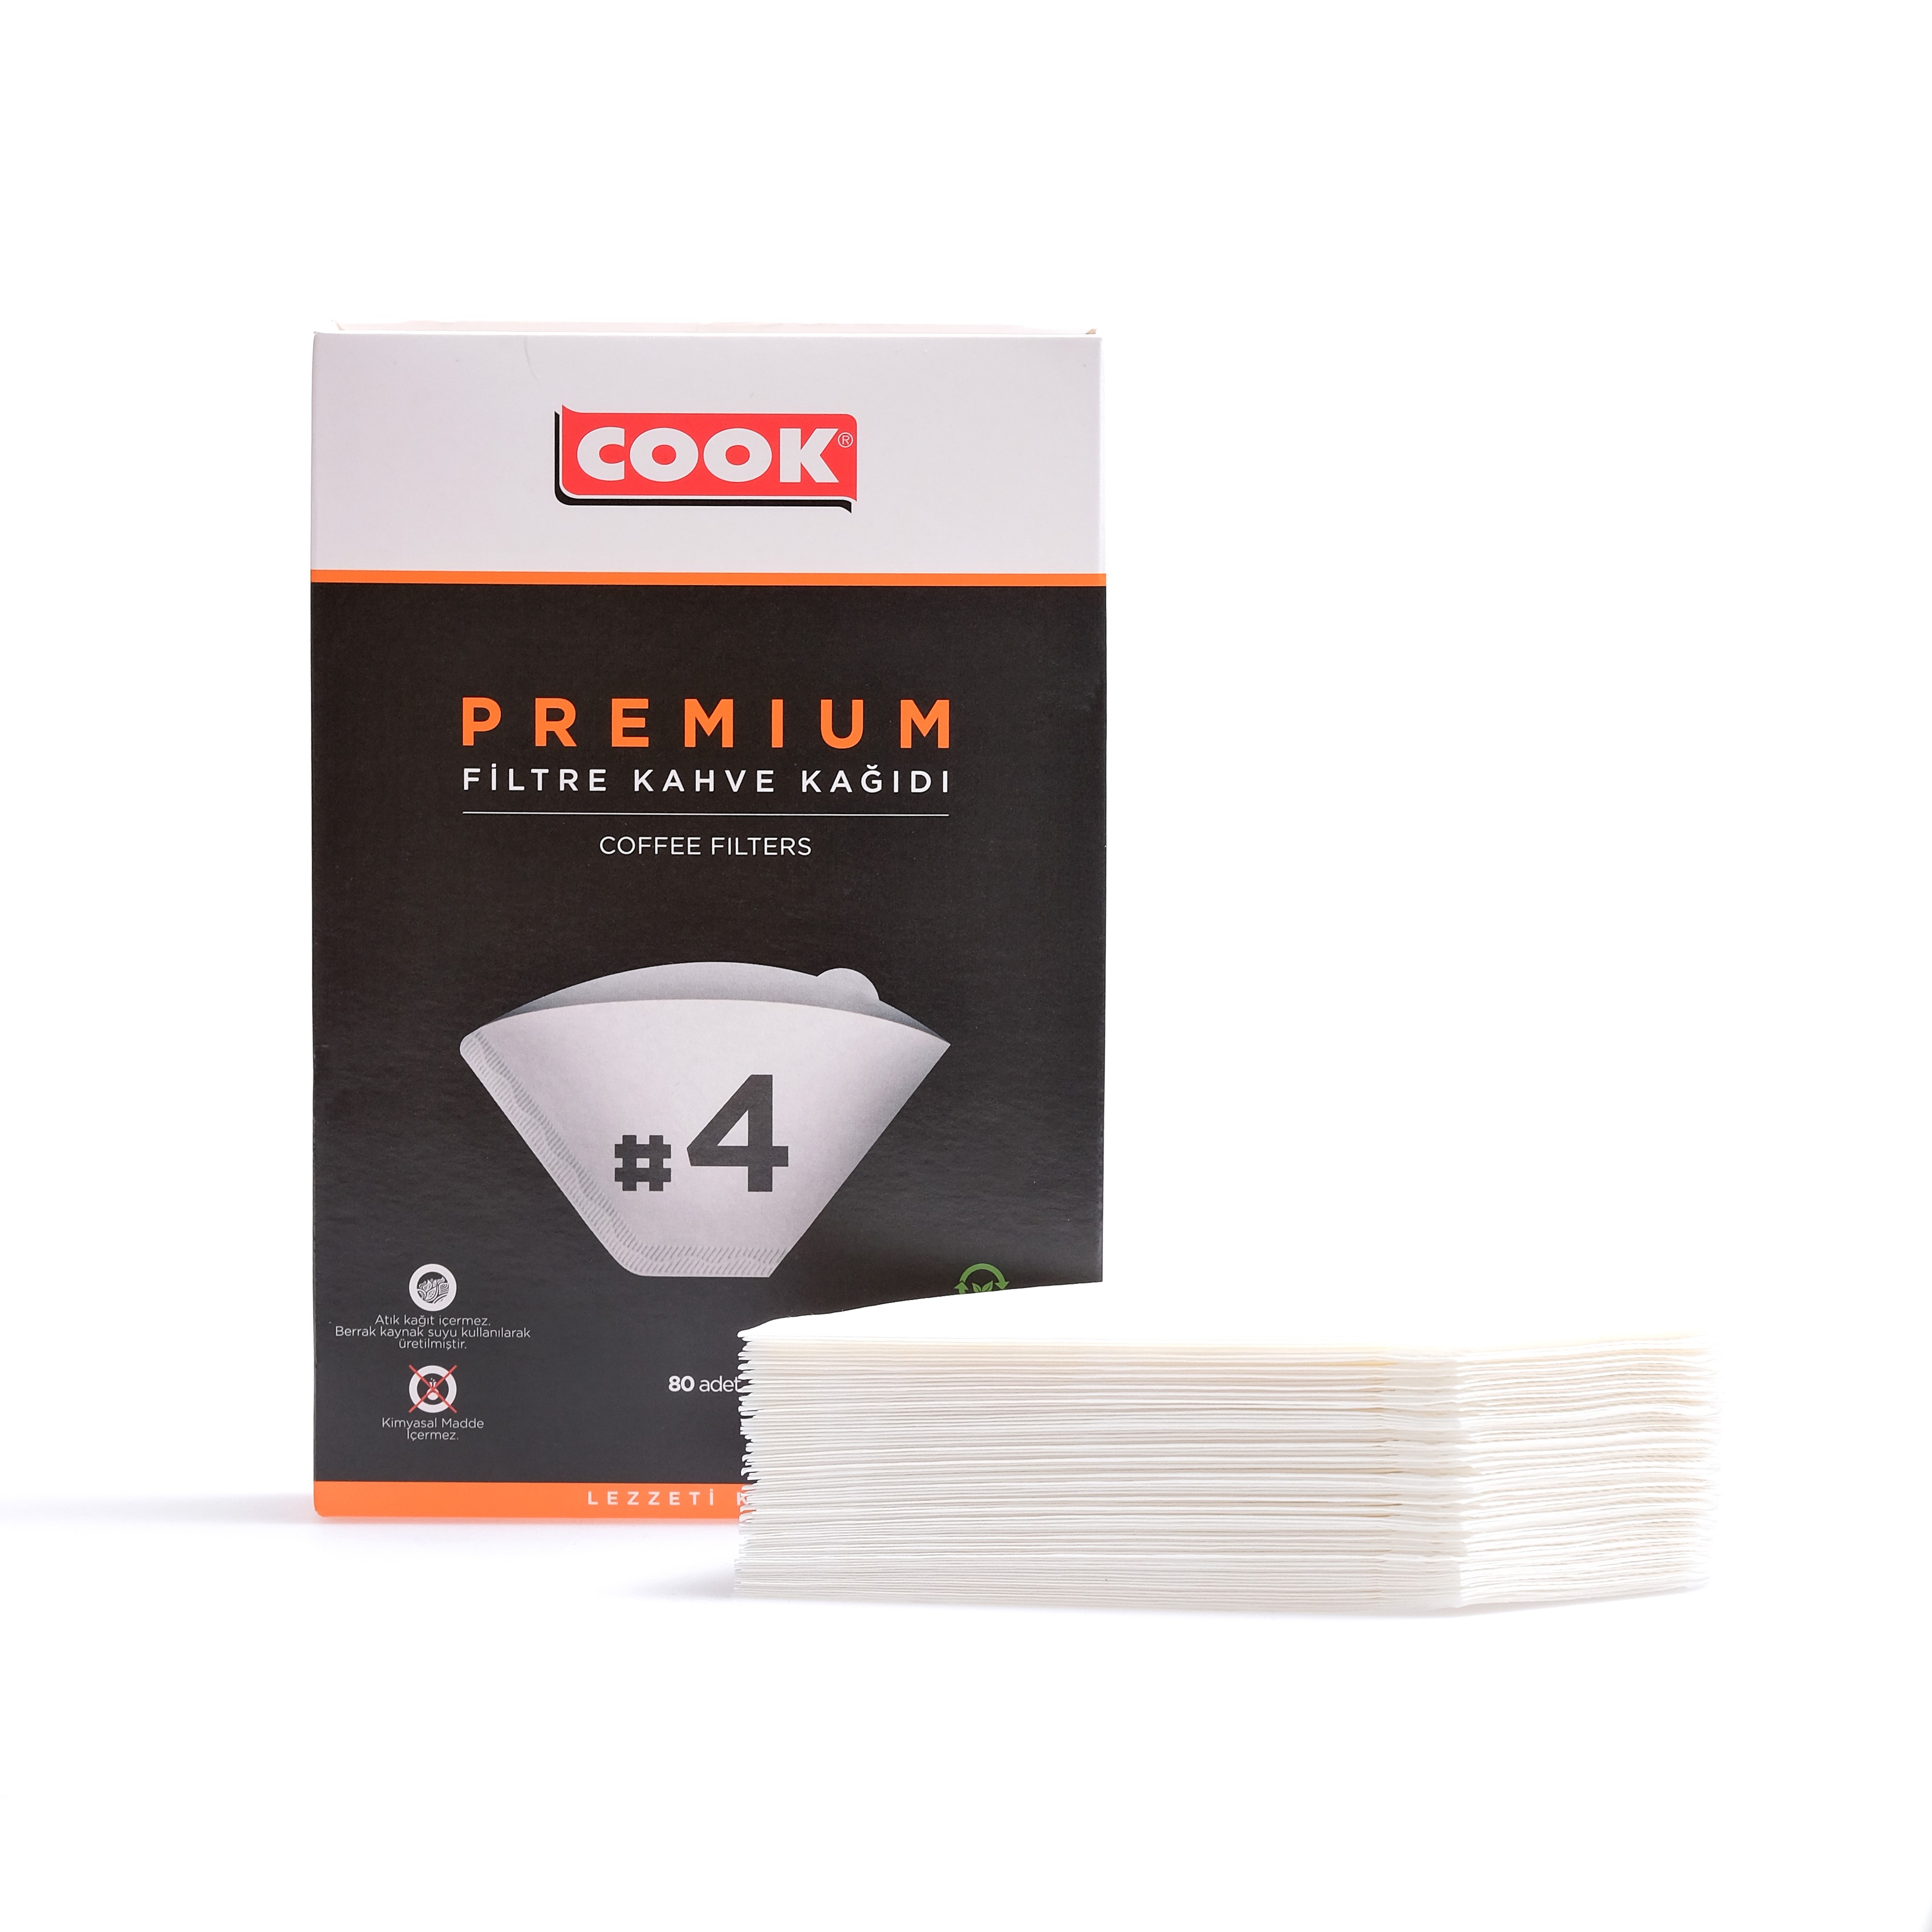 COOK Premium Filtre Kahve Kağıdı Ebat 4